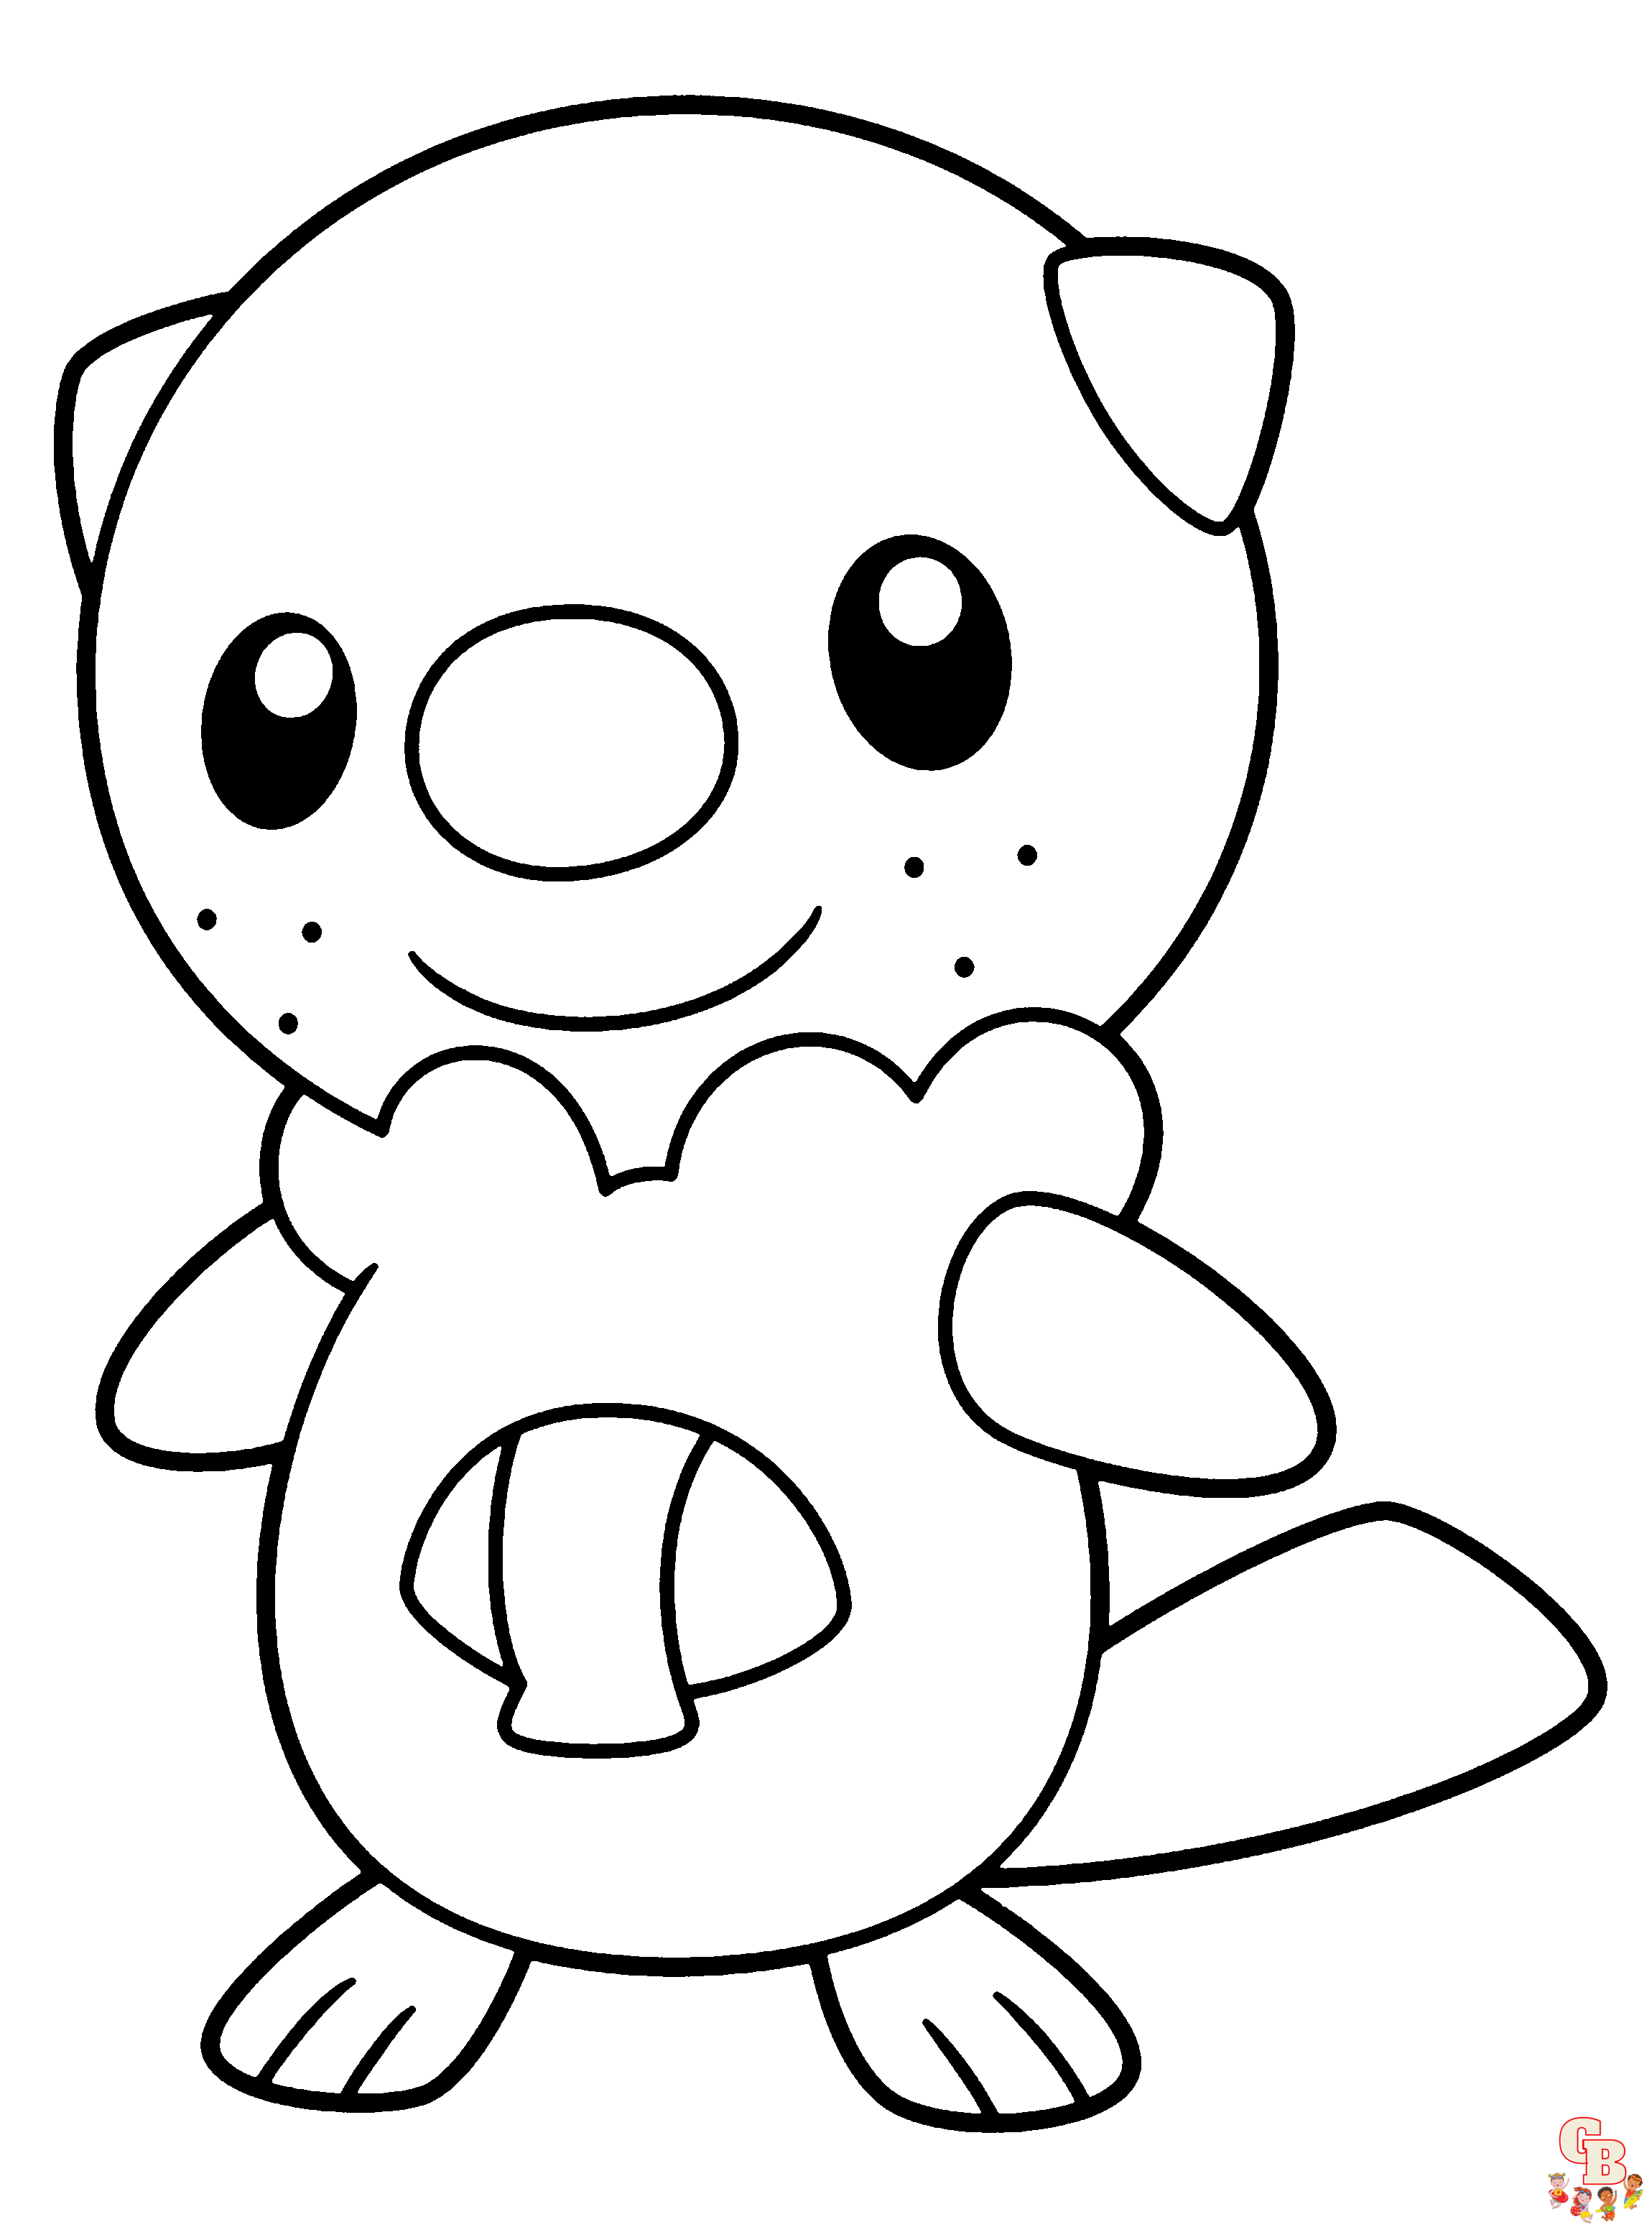 Free Pokemon Oshawott coloring pages for kids